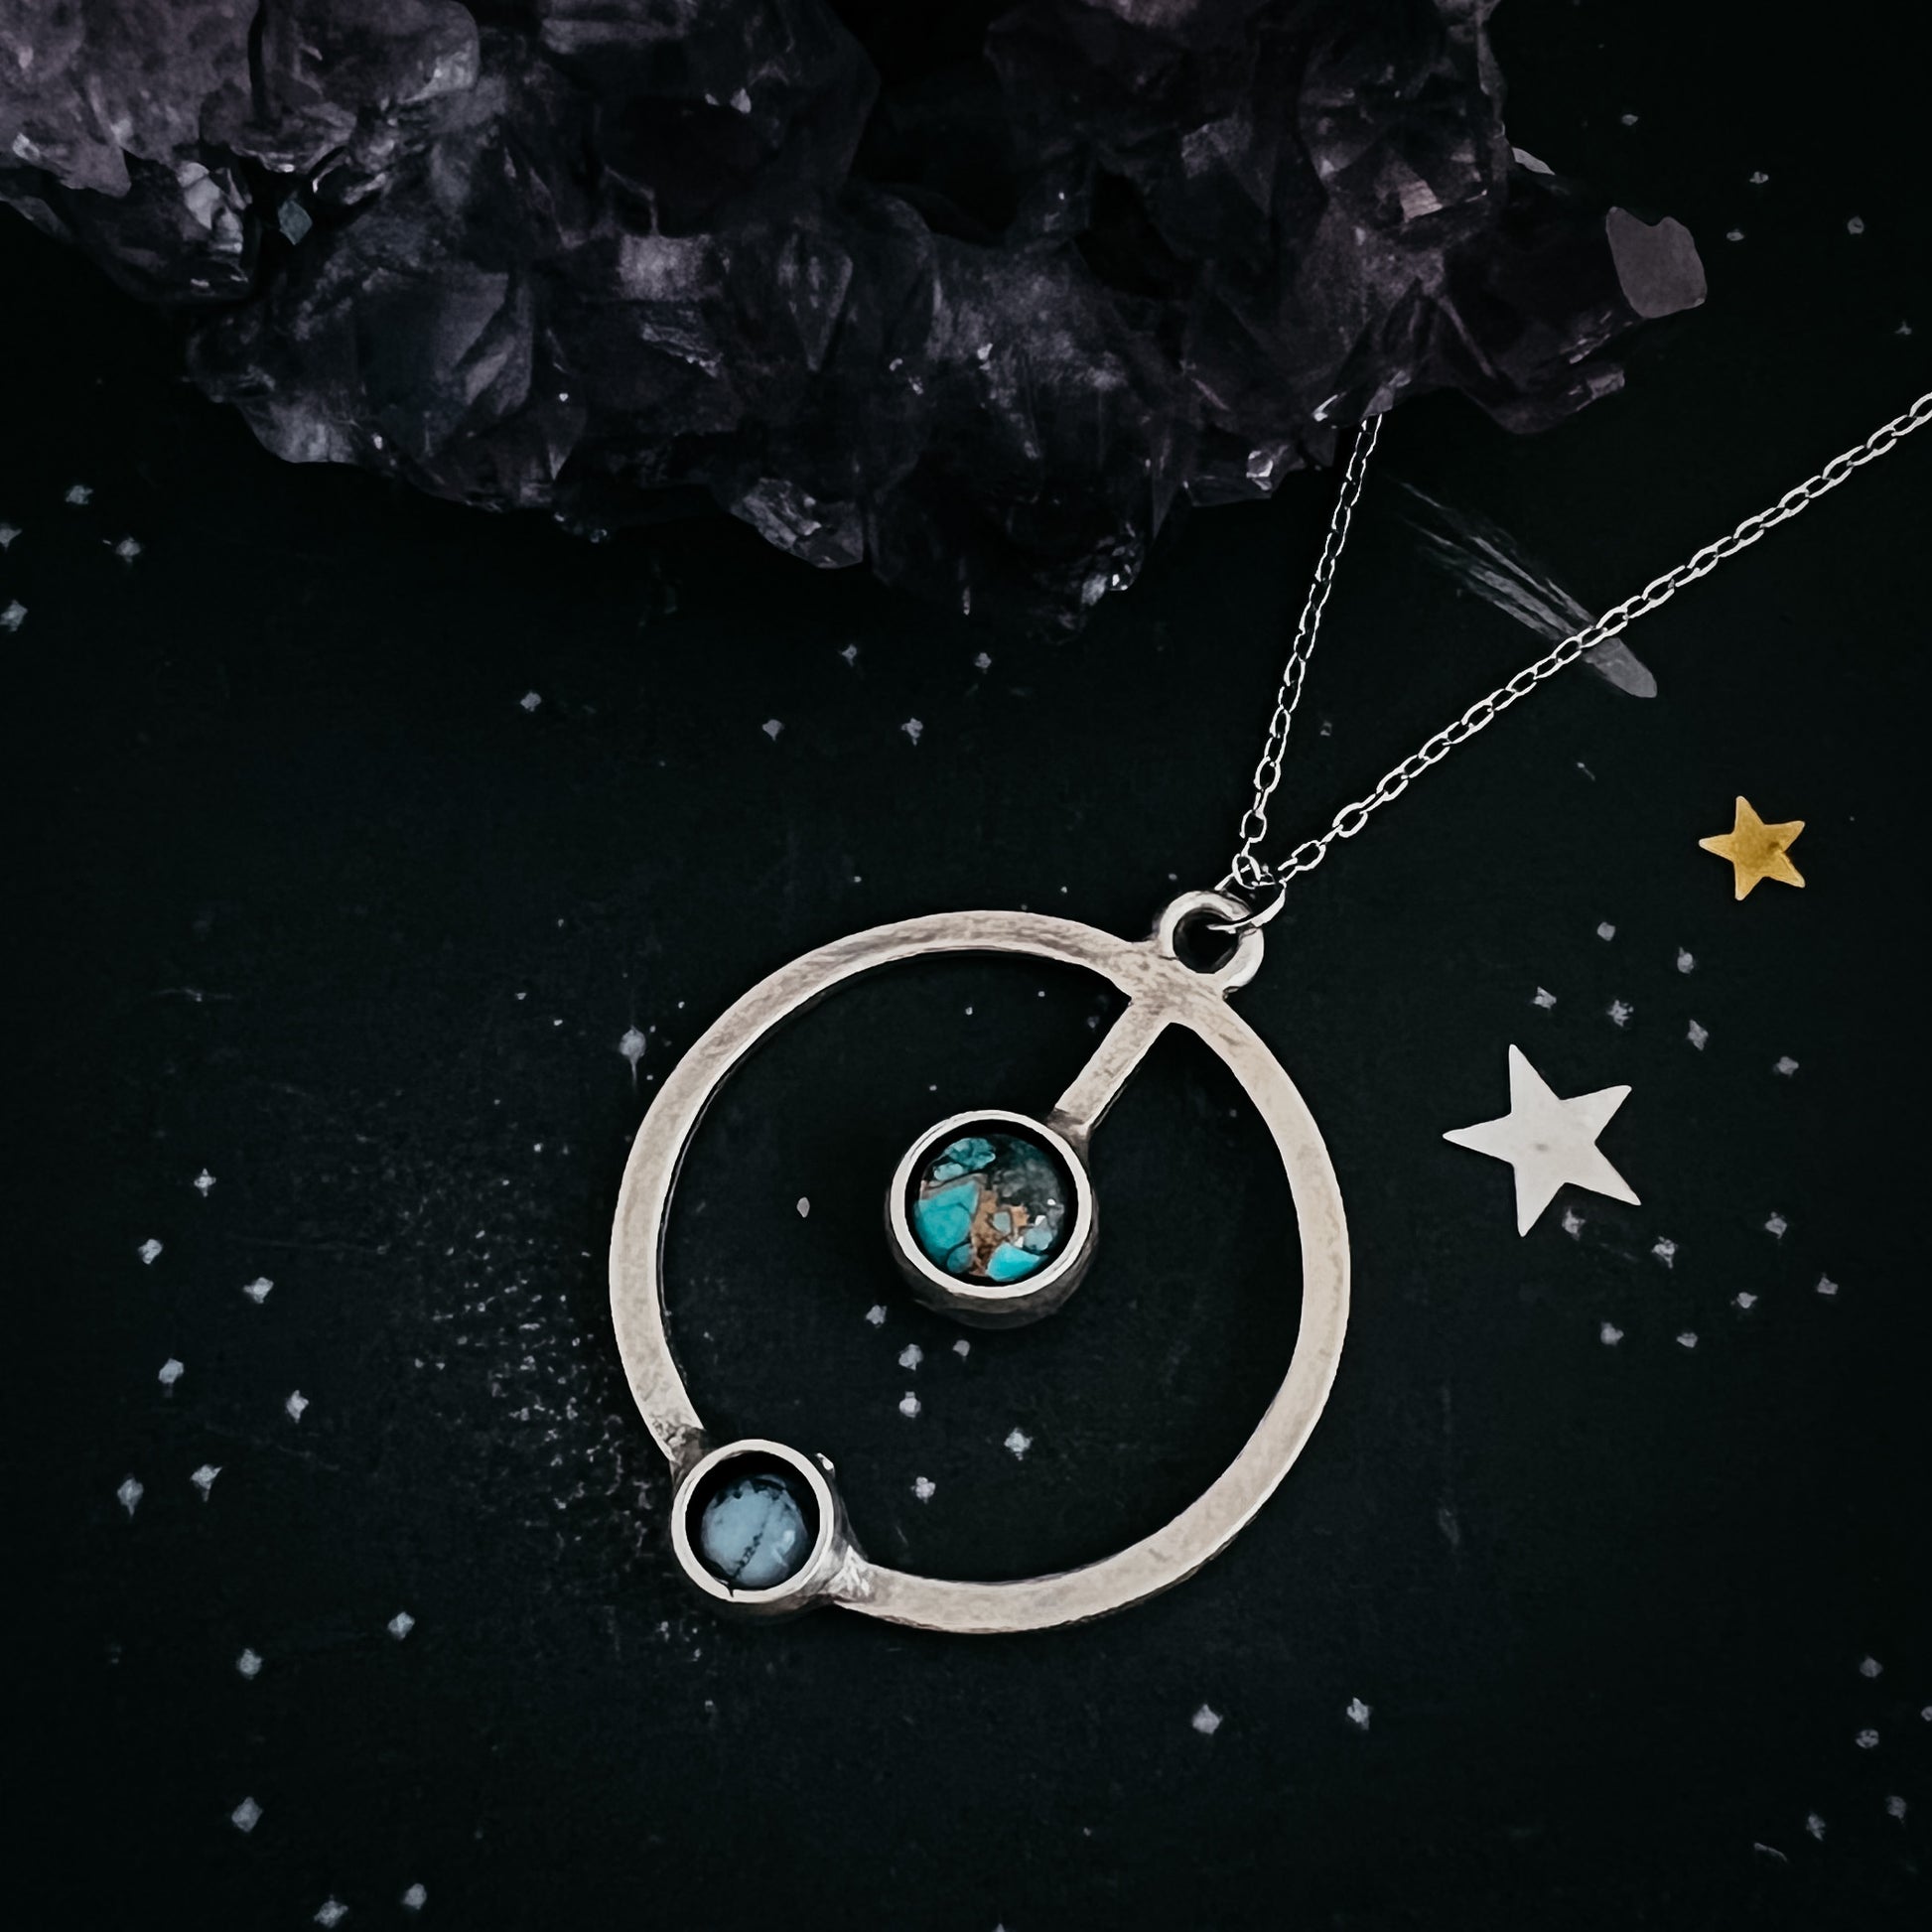 Artemis Necklace - Lunar Orbit Pendant with Natural Stones Necklace Yugen Handmade   